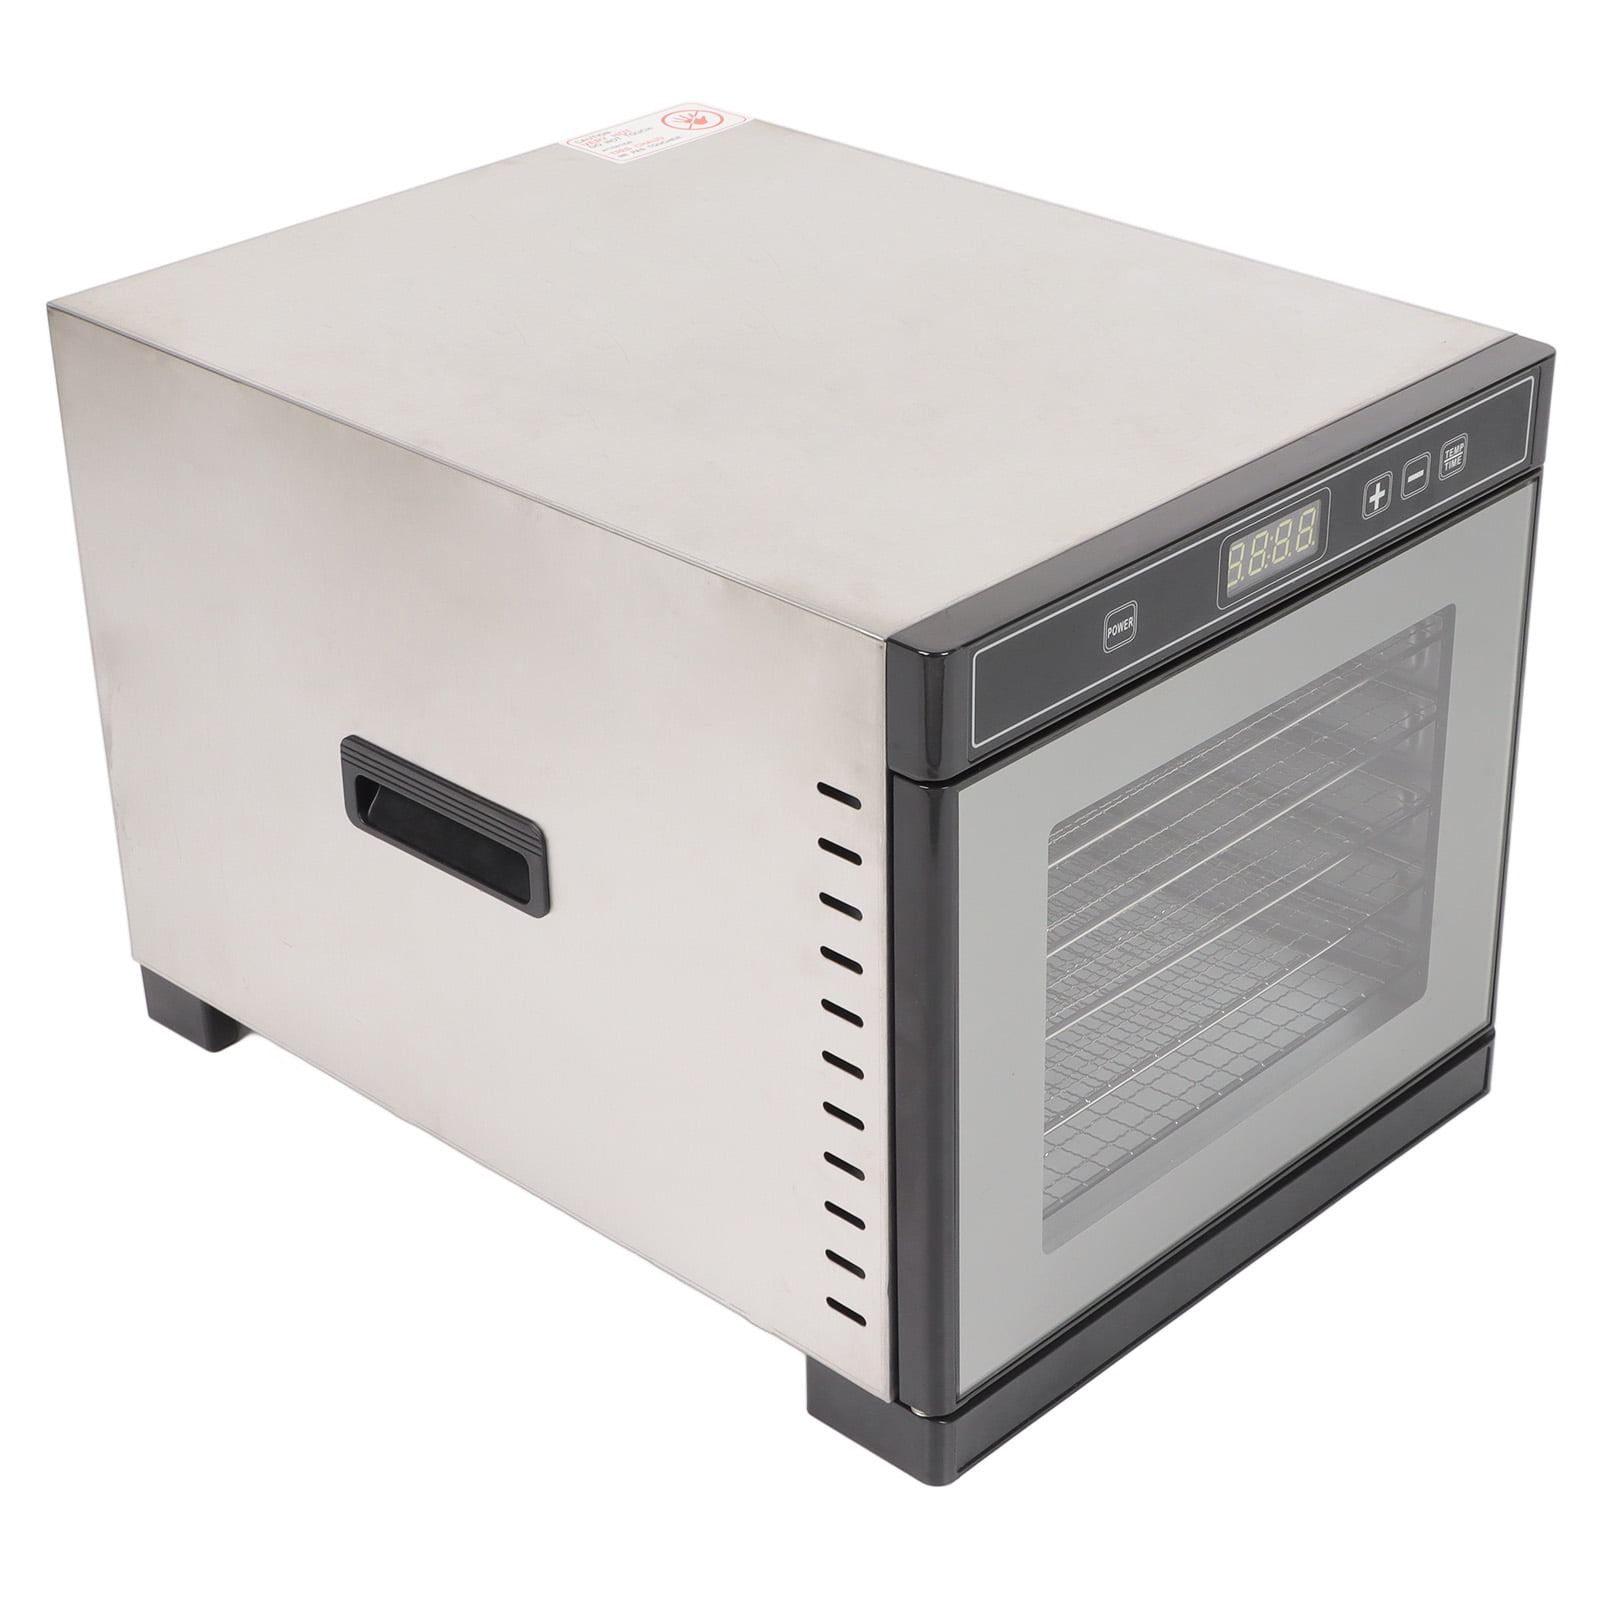 Techtongda 36 Layers Fruit & Vegetable Drying Machine Dehydrator Fruit Drying Machine 110V, Size: 17.7, Silver